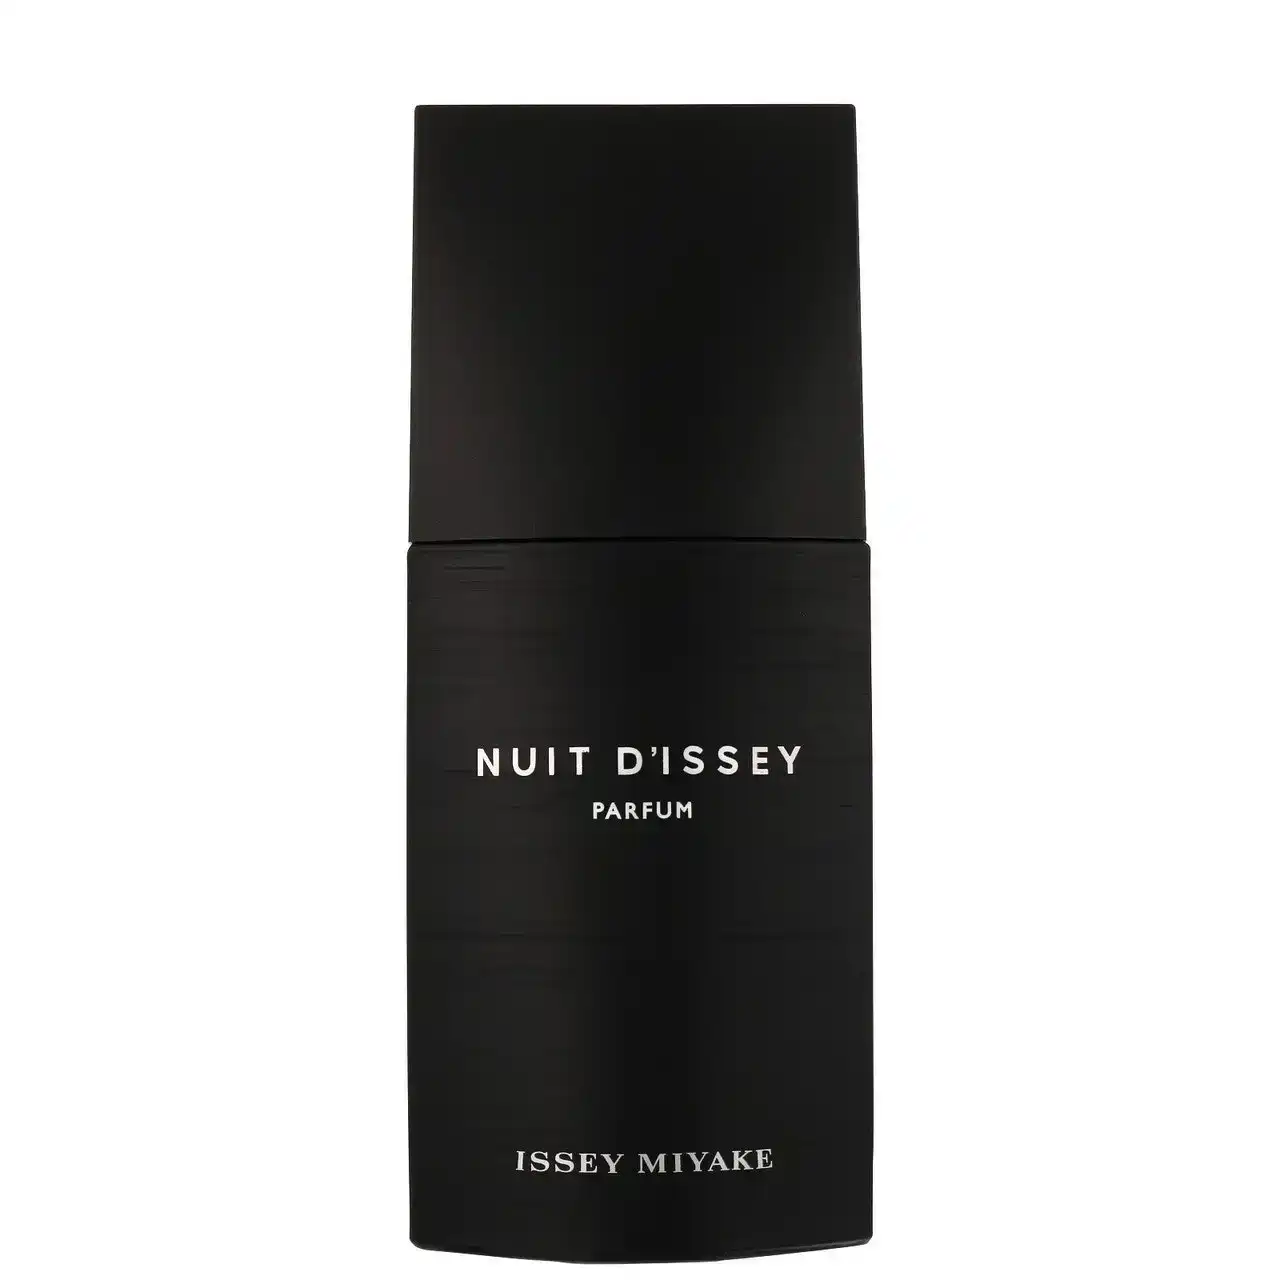 Issey Miyake Nuit D'issey Parfum 75ml